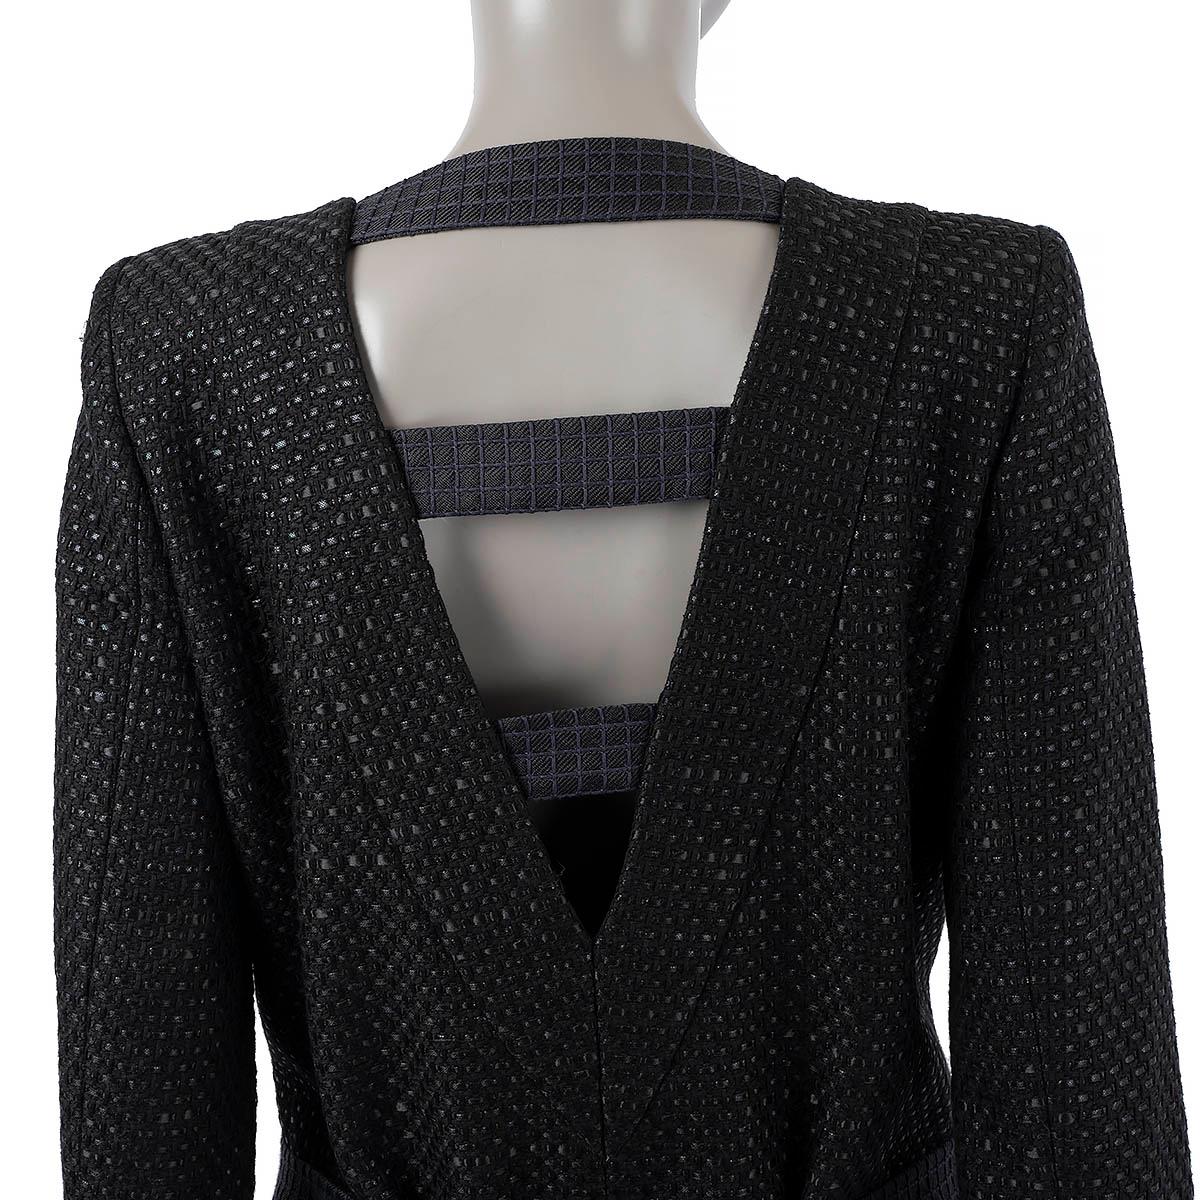 CHANEL black cotton 2016 16C SEOUL DOUBLE BREASTED PANT Suit 38 S 1